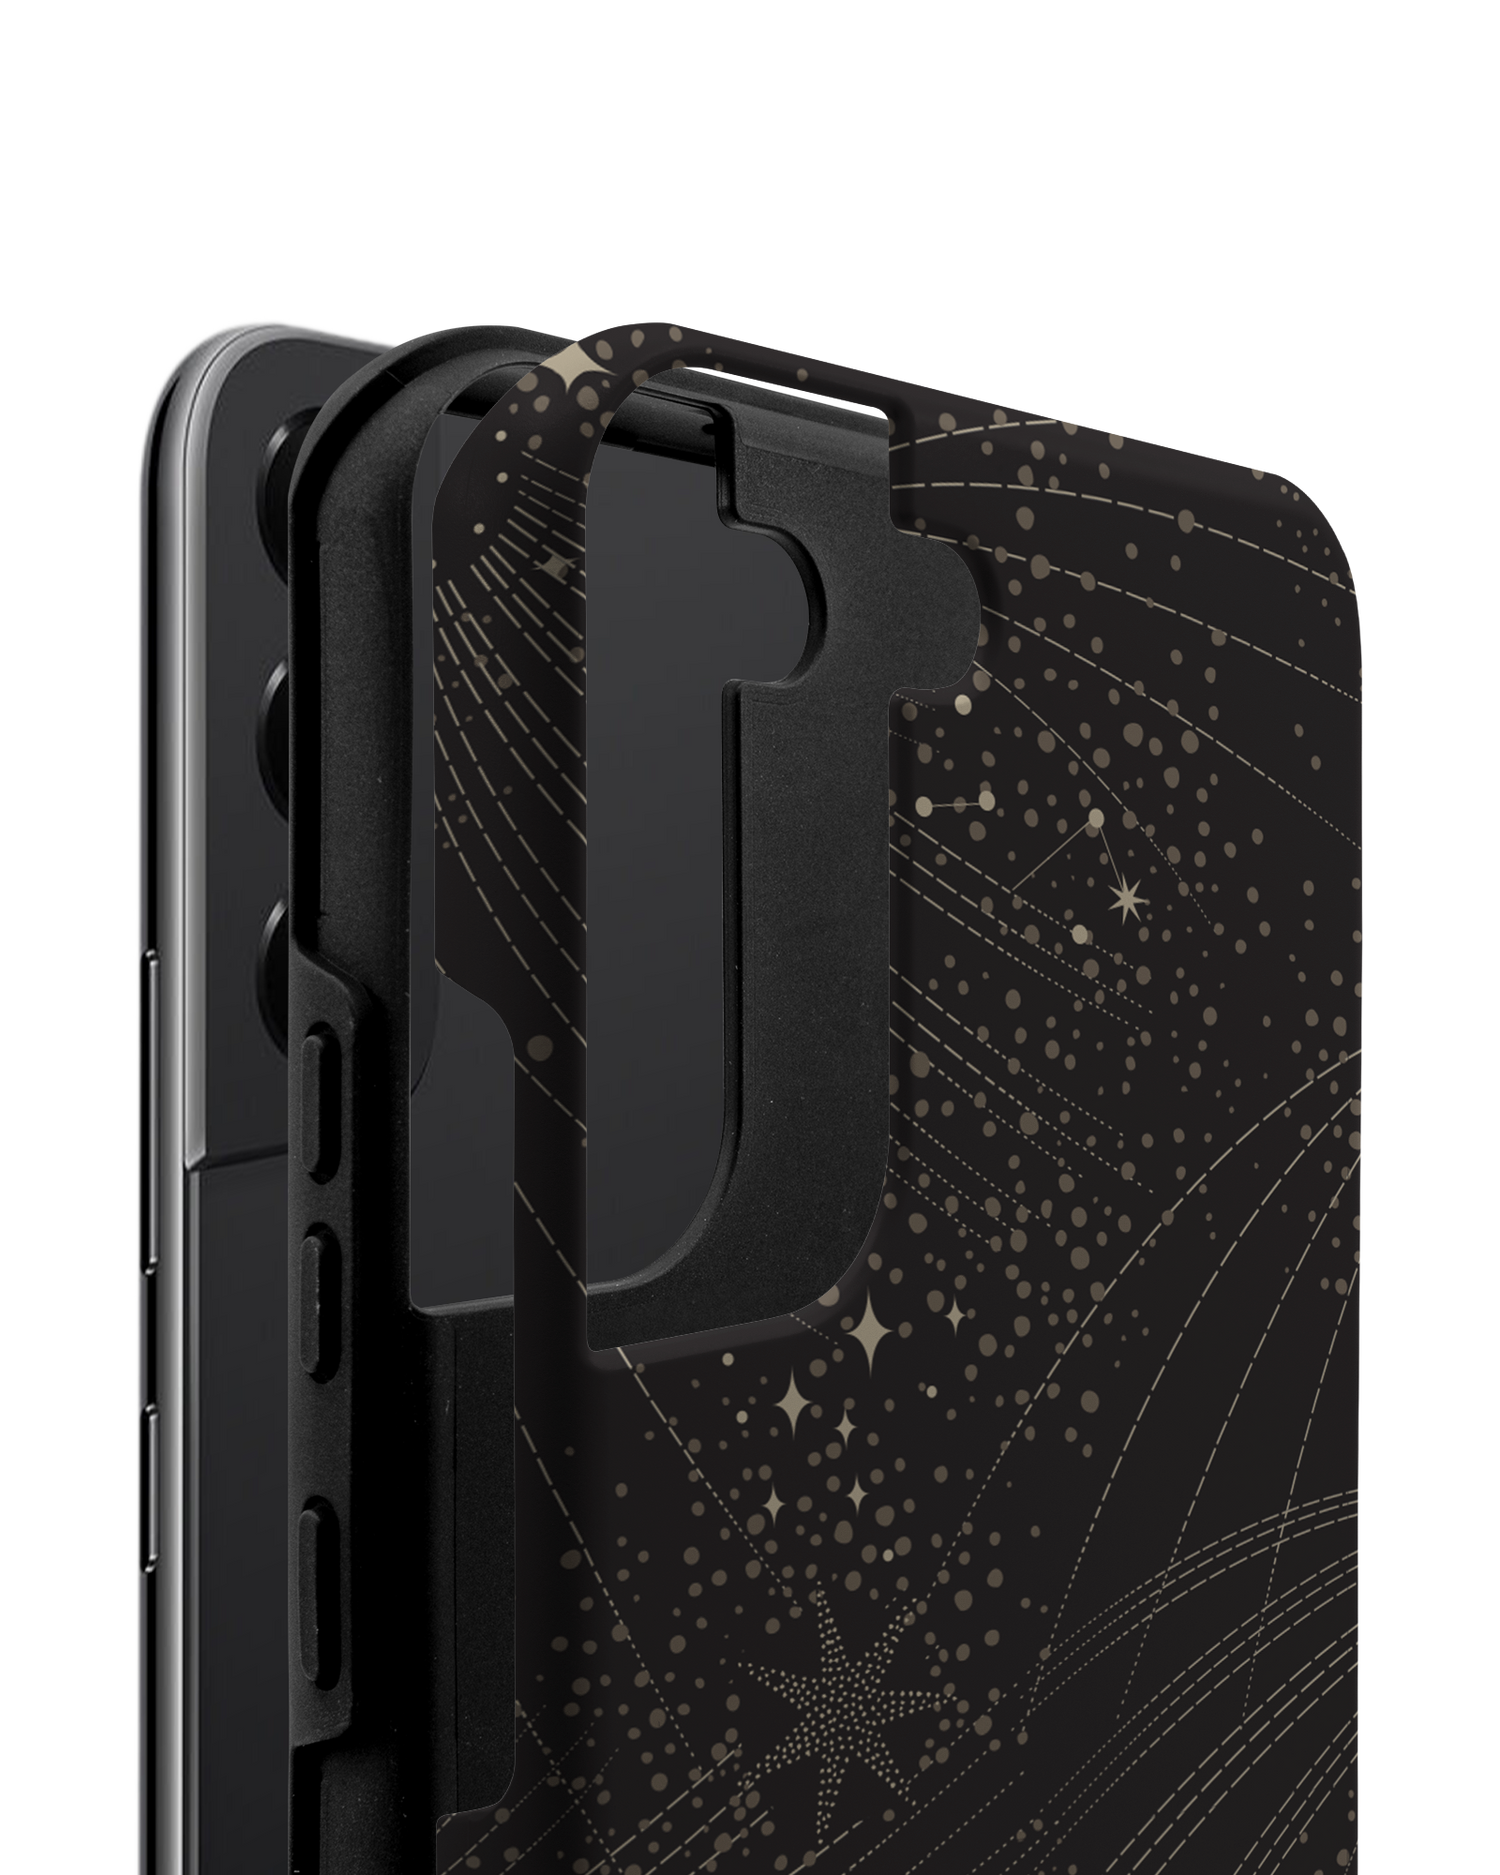 Make a Wish Star Premium Phone Case Samsung Galaxy S22 5G consisting of 2 parts